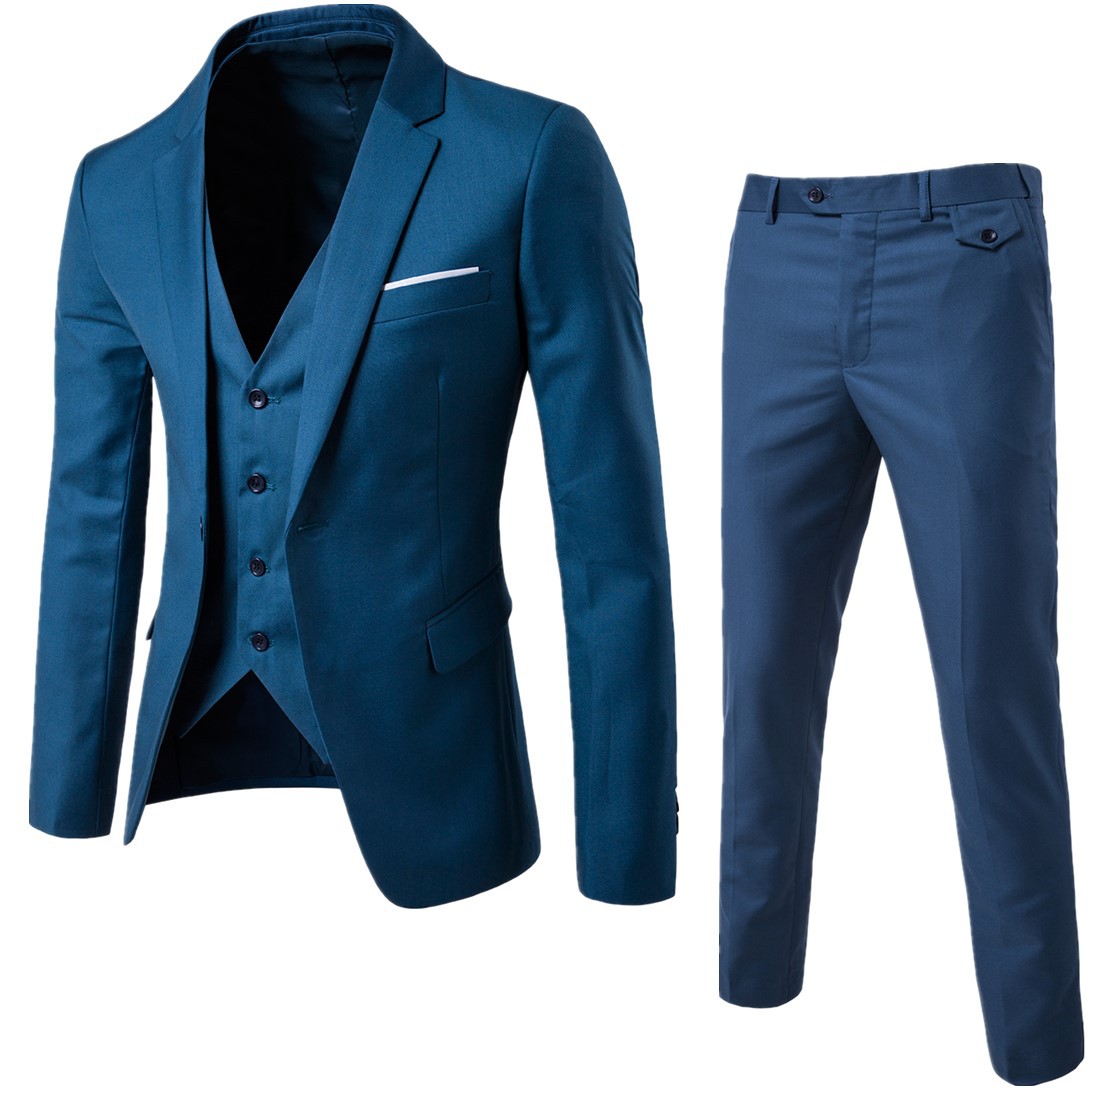 2018 men's autumn and winter new suit three piece thin cross border men's business career three piece suit coat